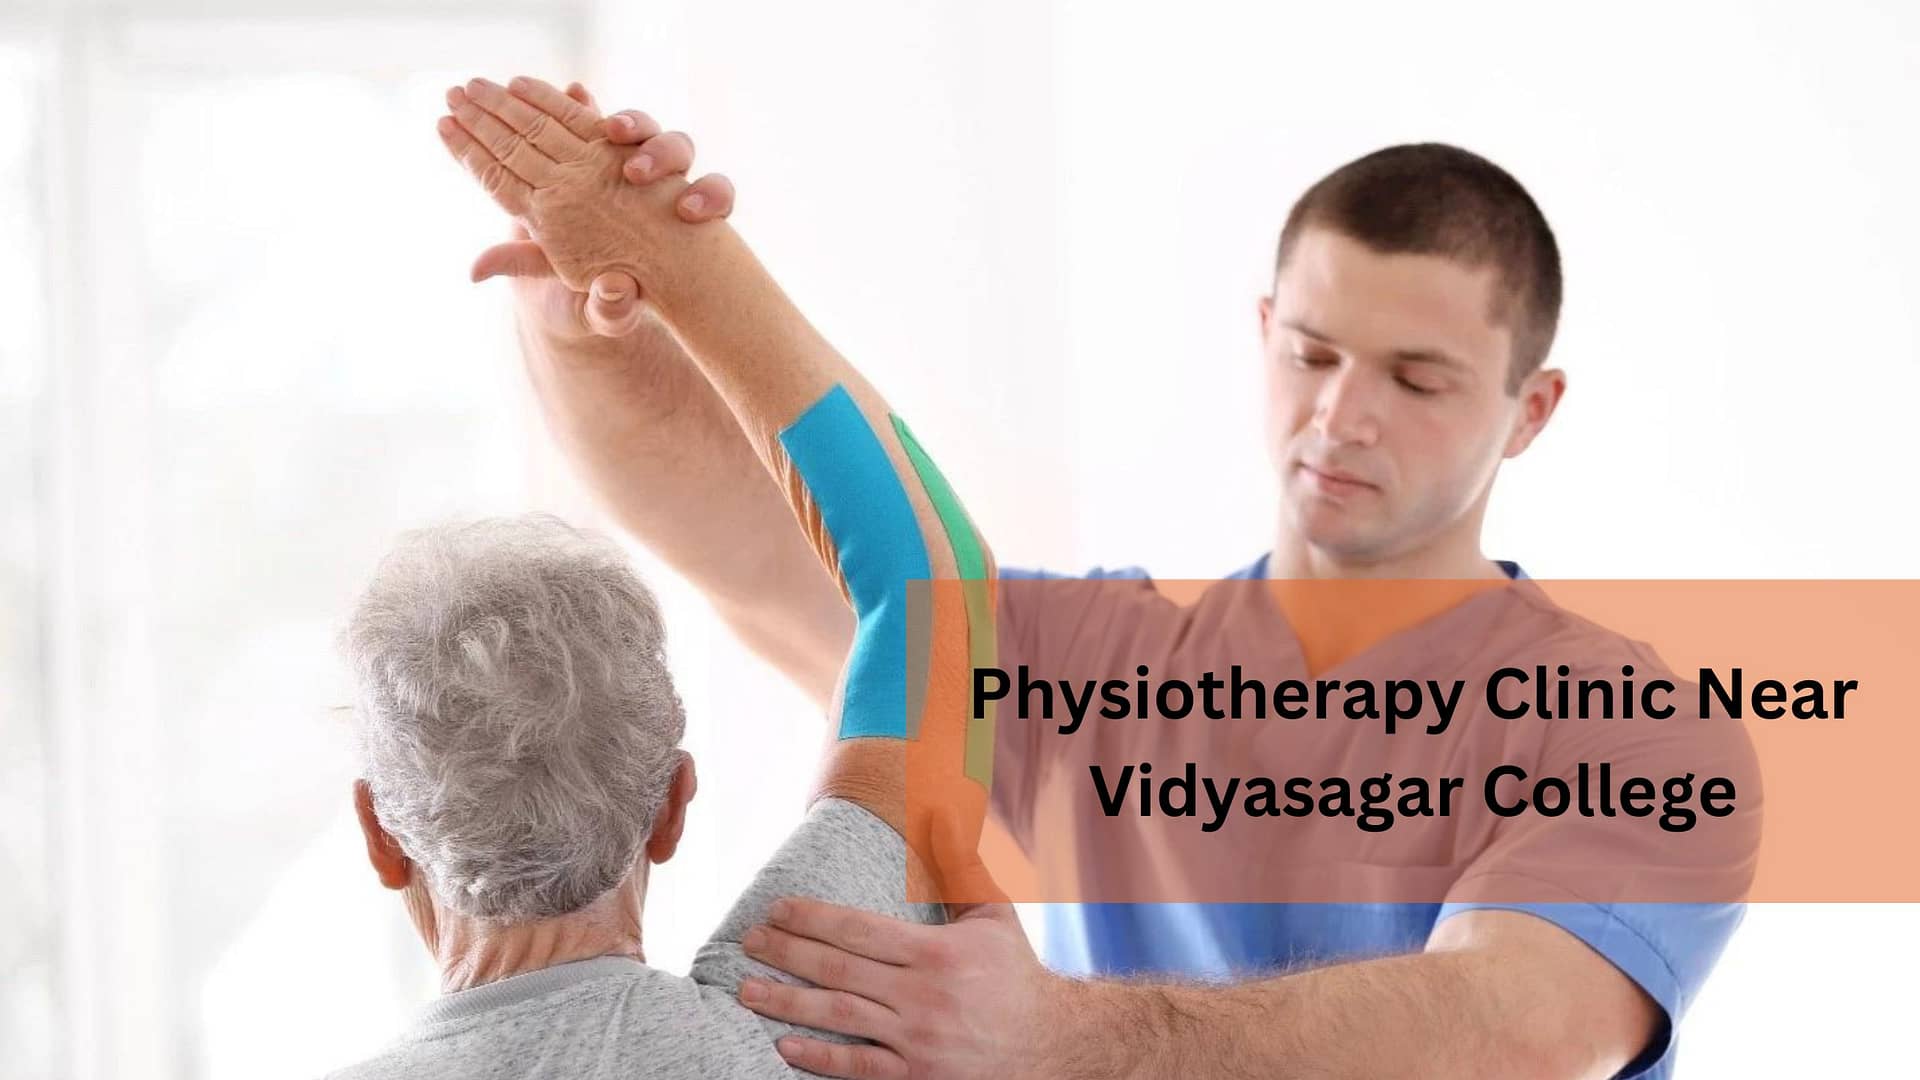 Physiotherapy Clinic Near Vidyasar College